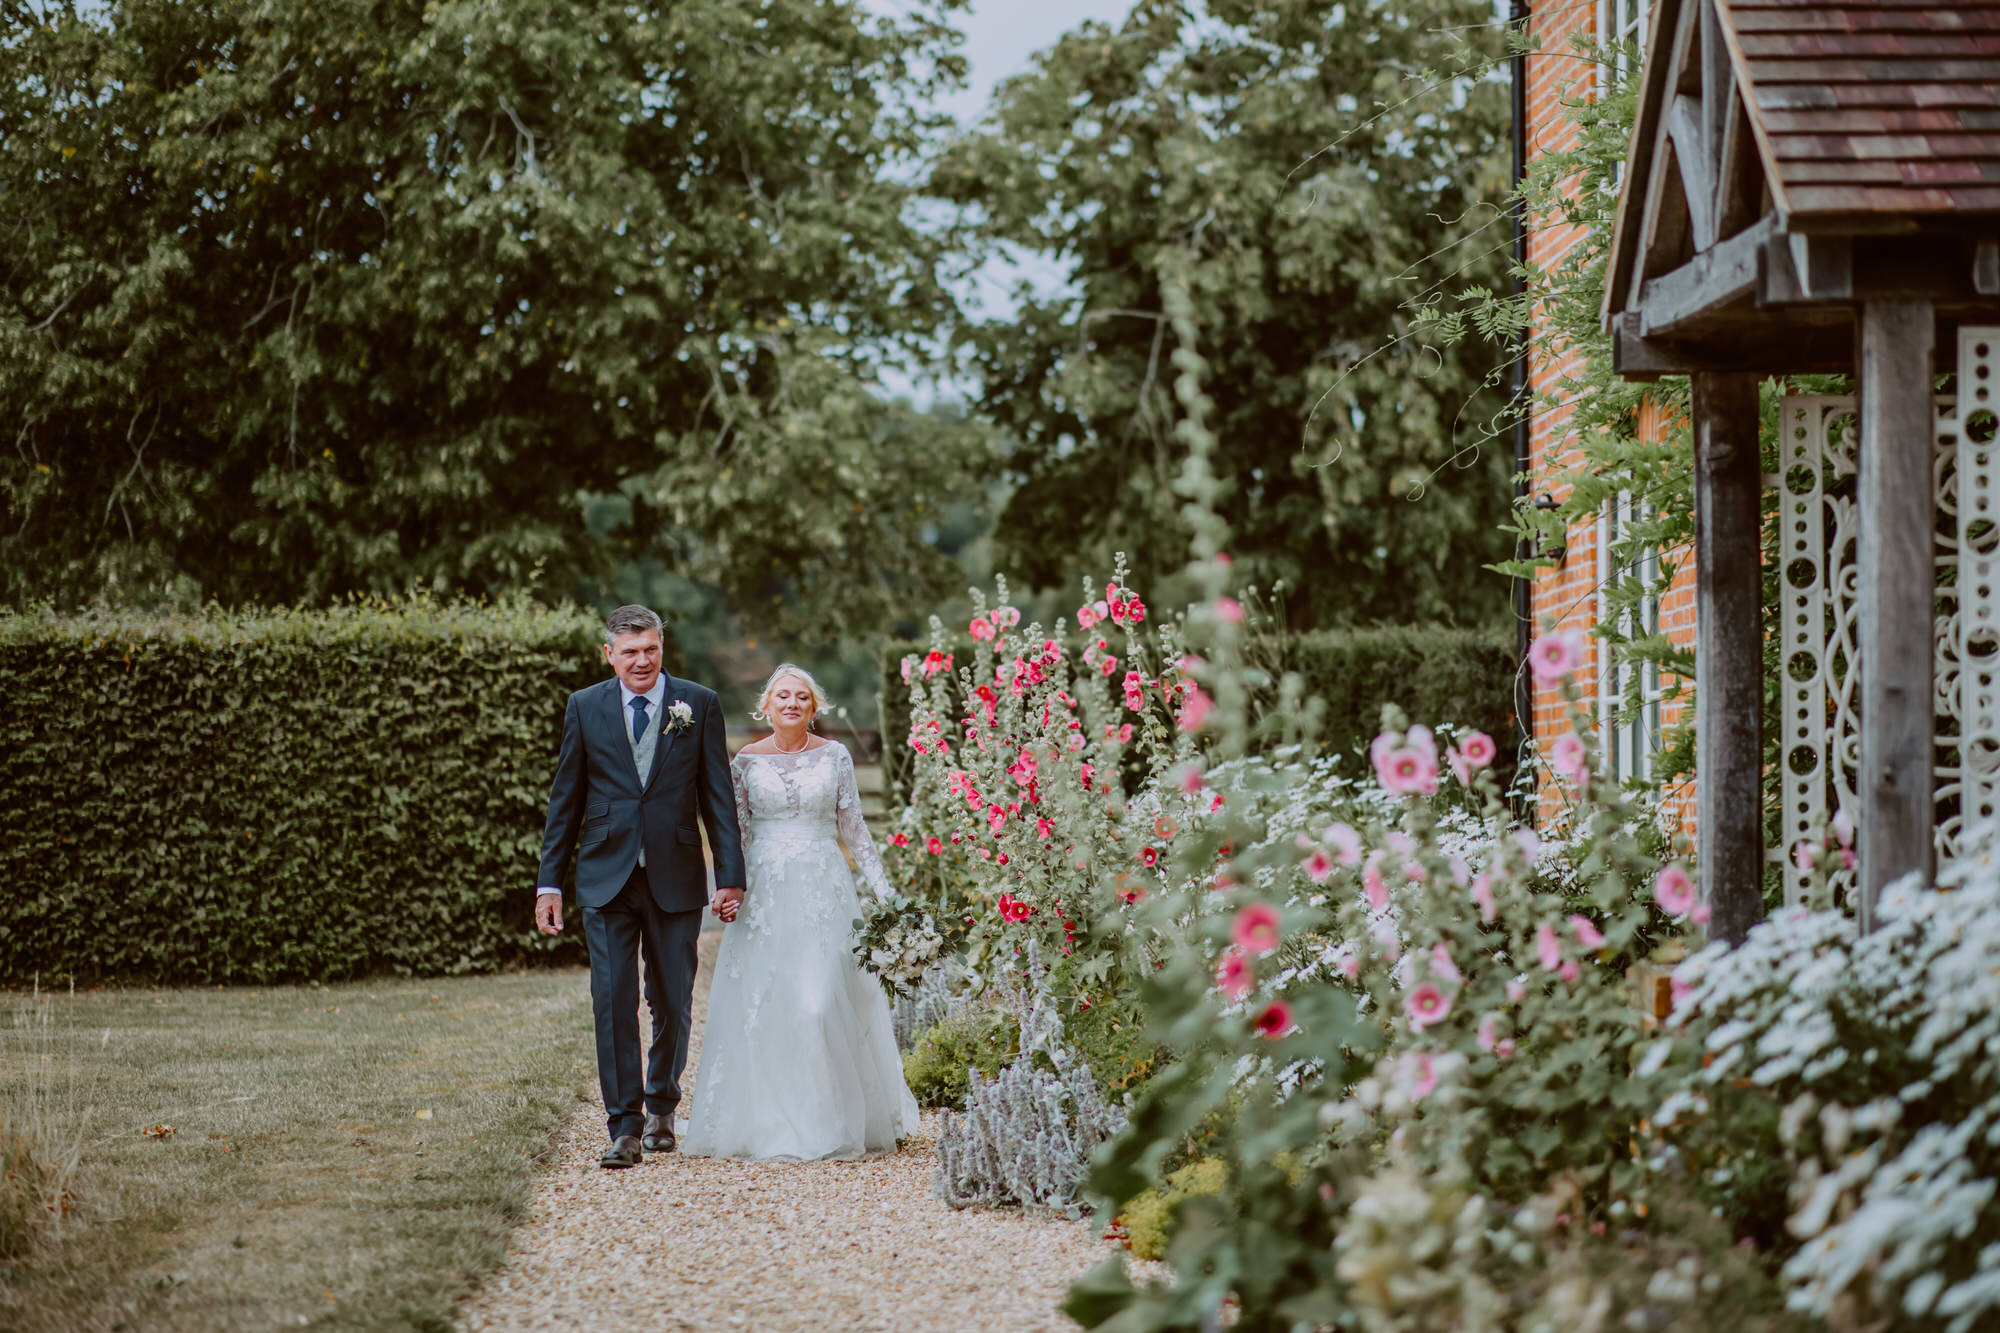 bride and groom walk hand in hand through the gardens at Primrose Hill Farm during their wedding photos